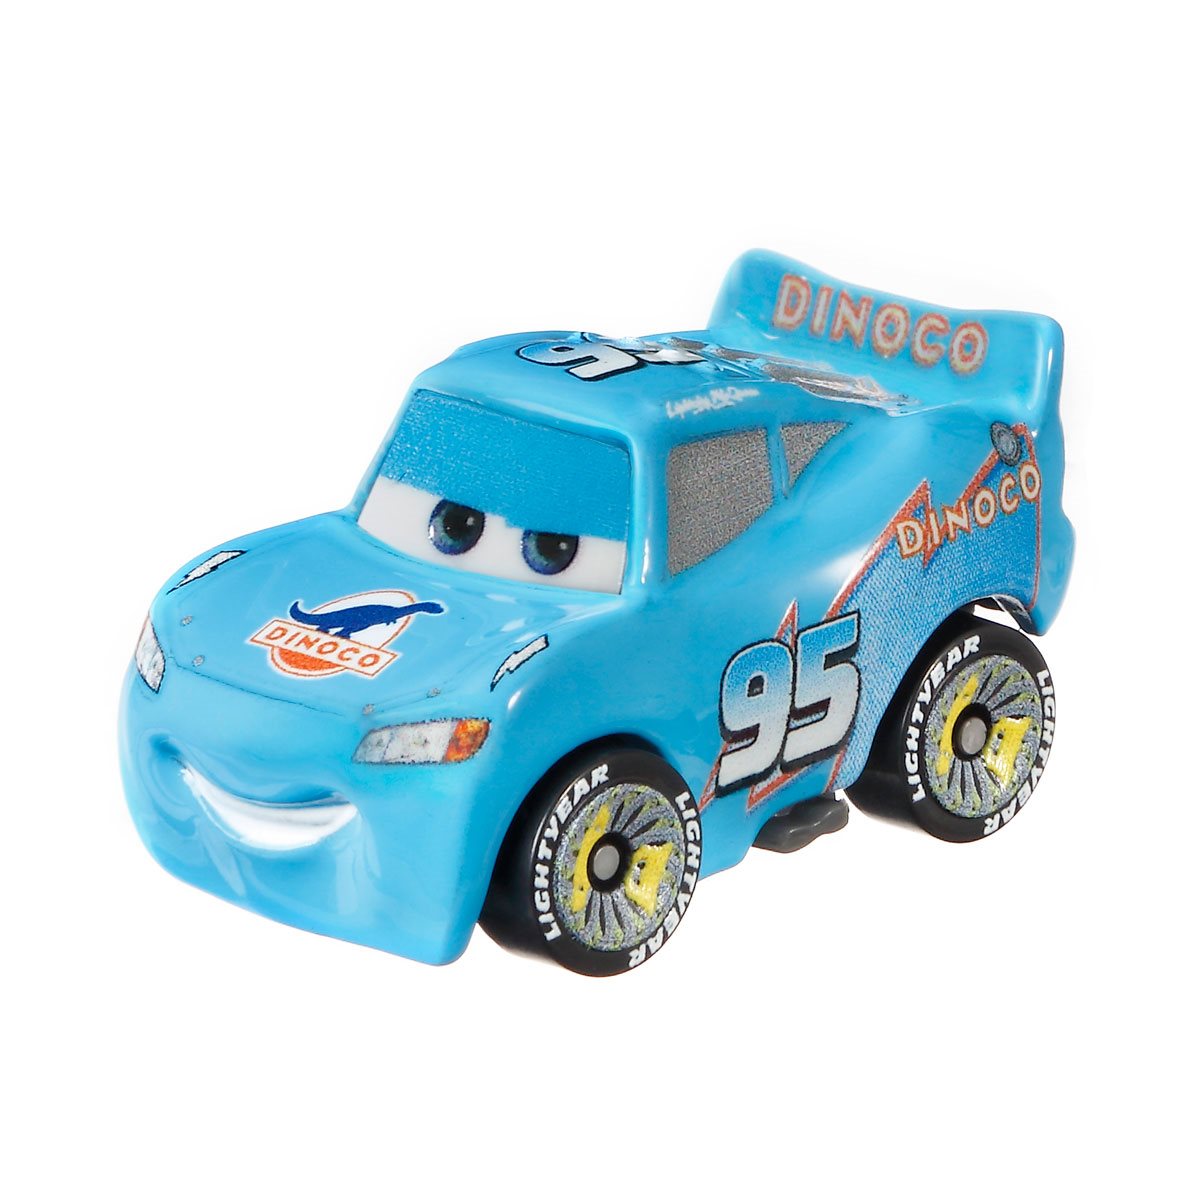 Disney/Pixar Cars Metallic Cars 3 Lightning McQueen Vehicle